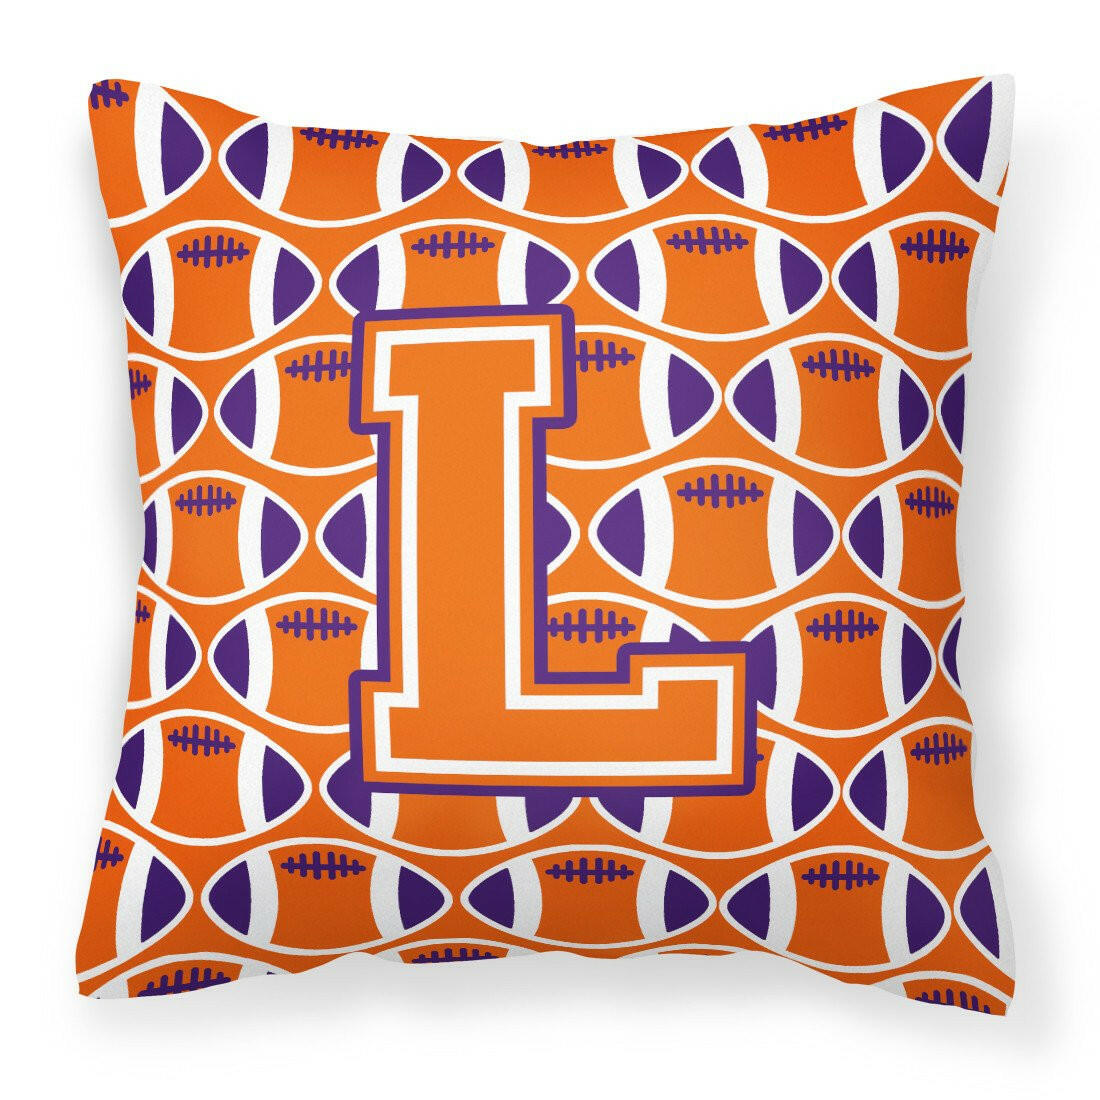 Letter L Football Orange, White and Regalia Fabric Decorative Pillow CJ1072-LPW1414 by Caroline's Treasures